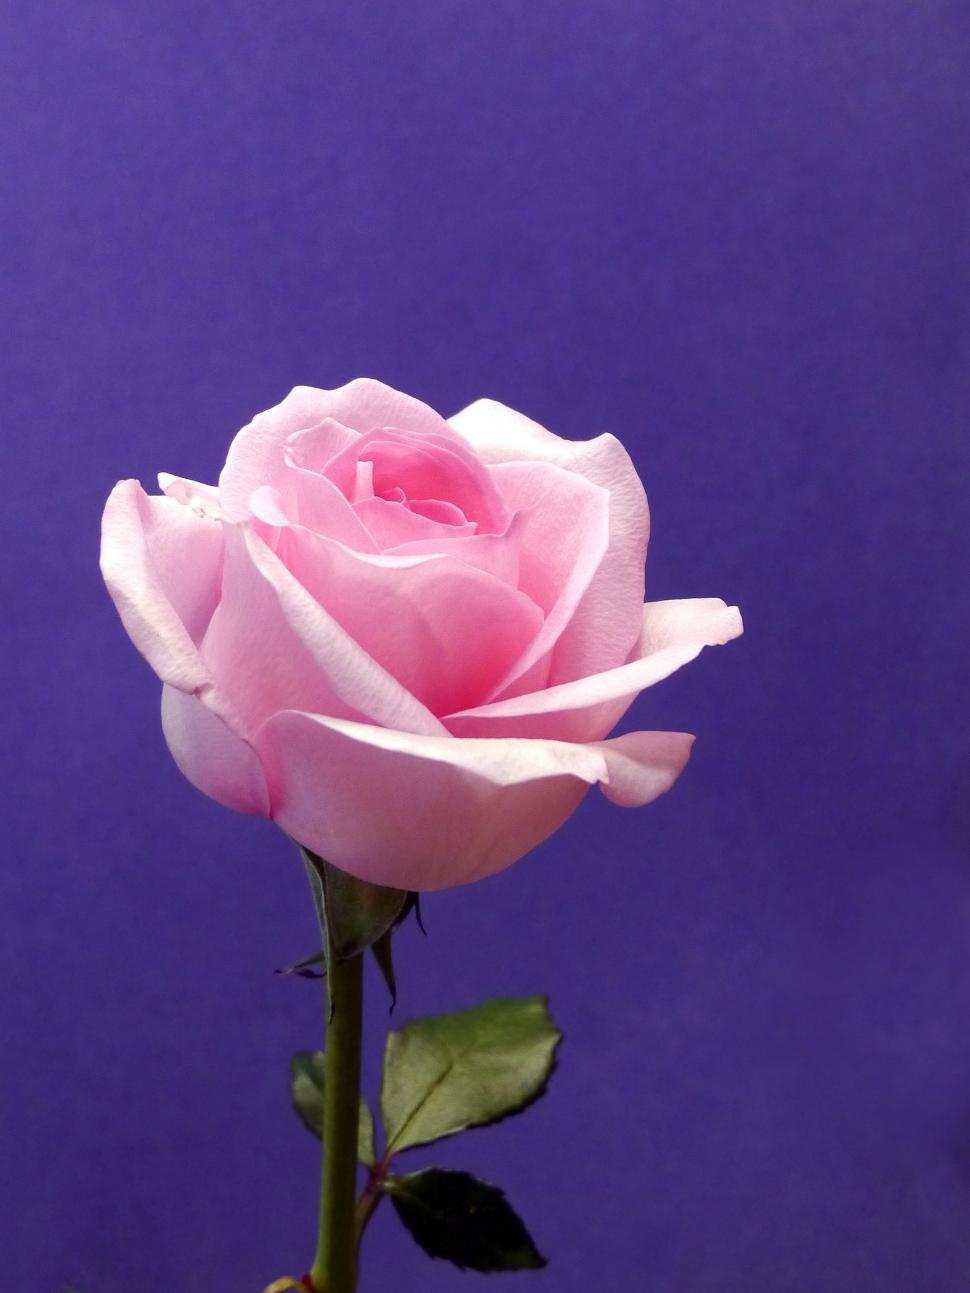 Free Image of Pink Rose on Purple 